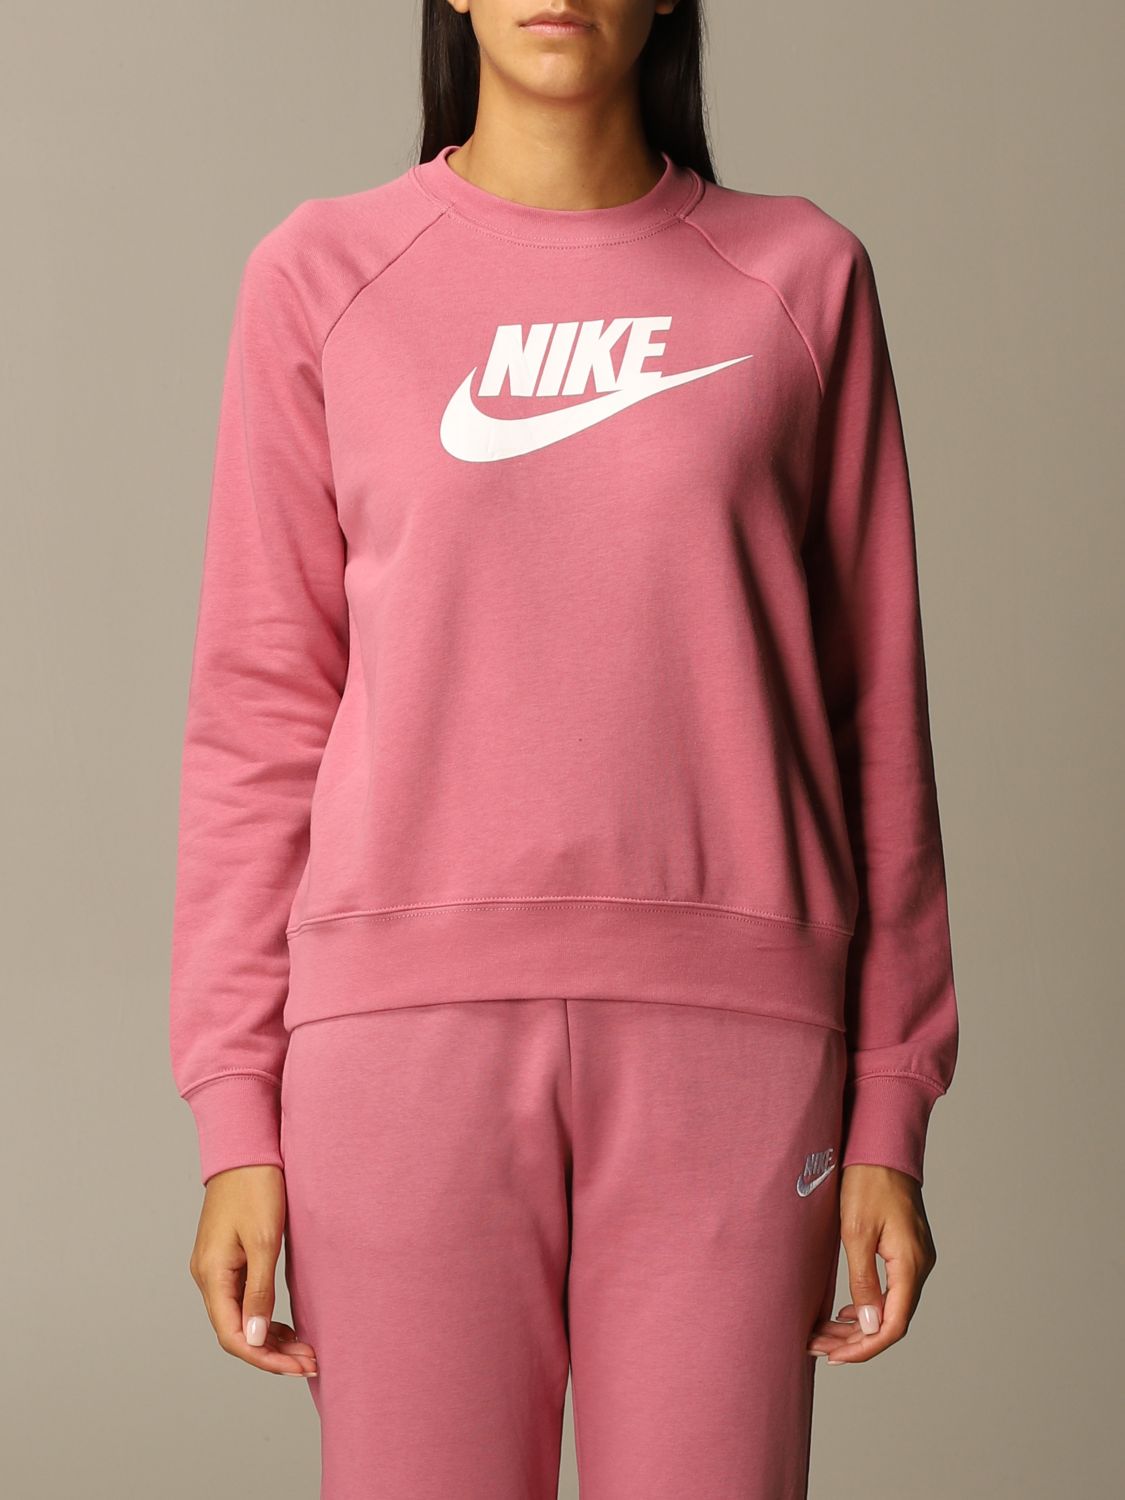 nike sweatshirt womens pink